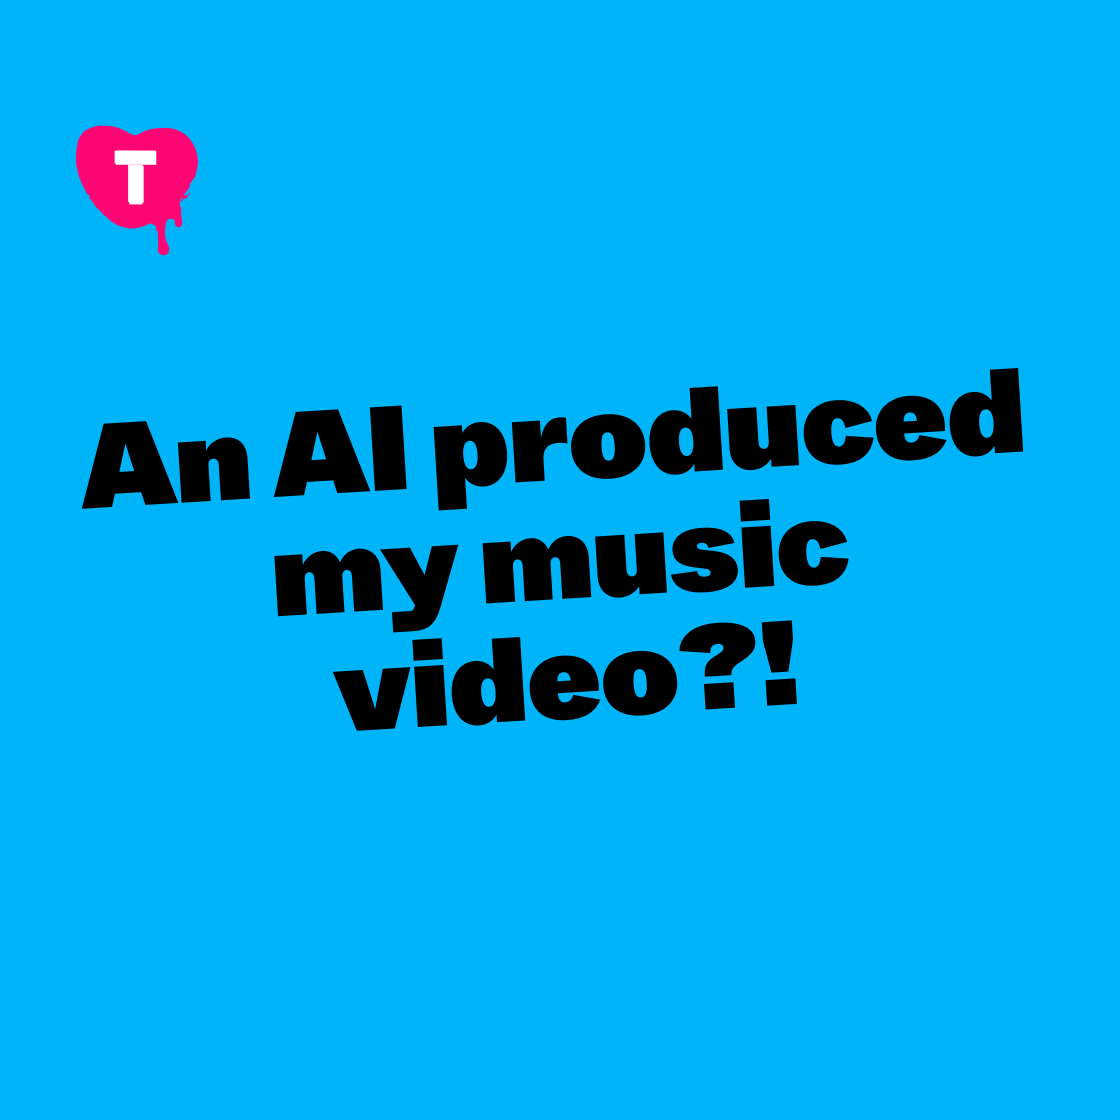 An AI produced my music video?!